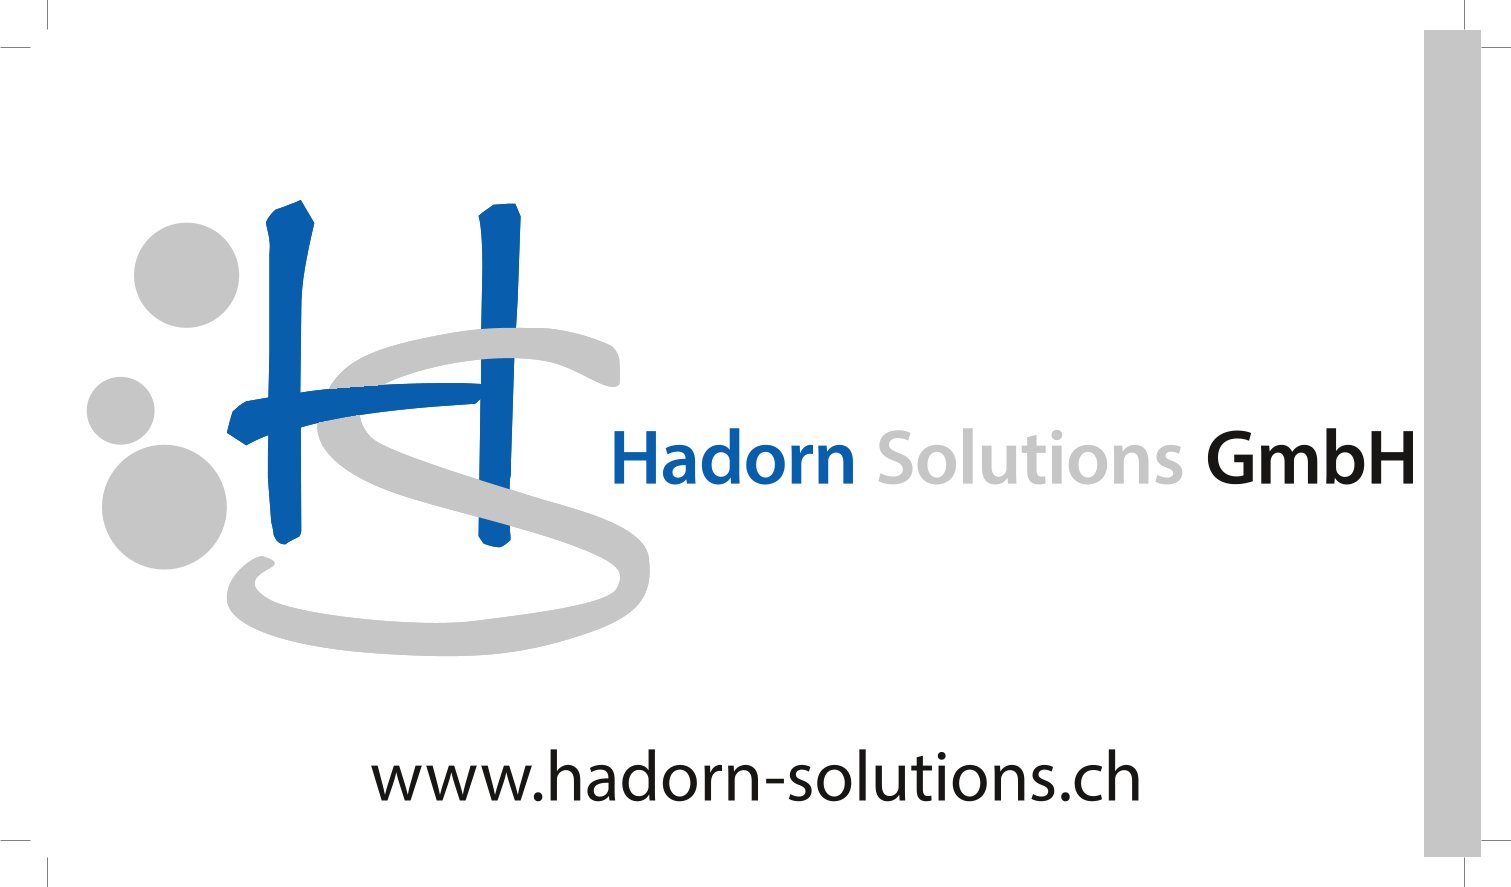 Hadorn Solutions GmbH